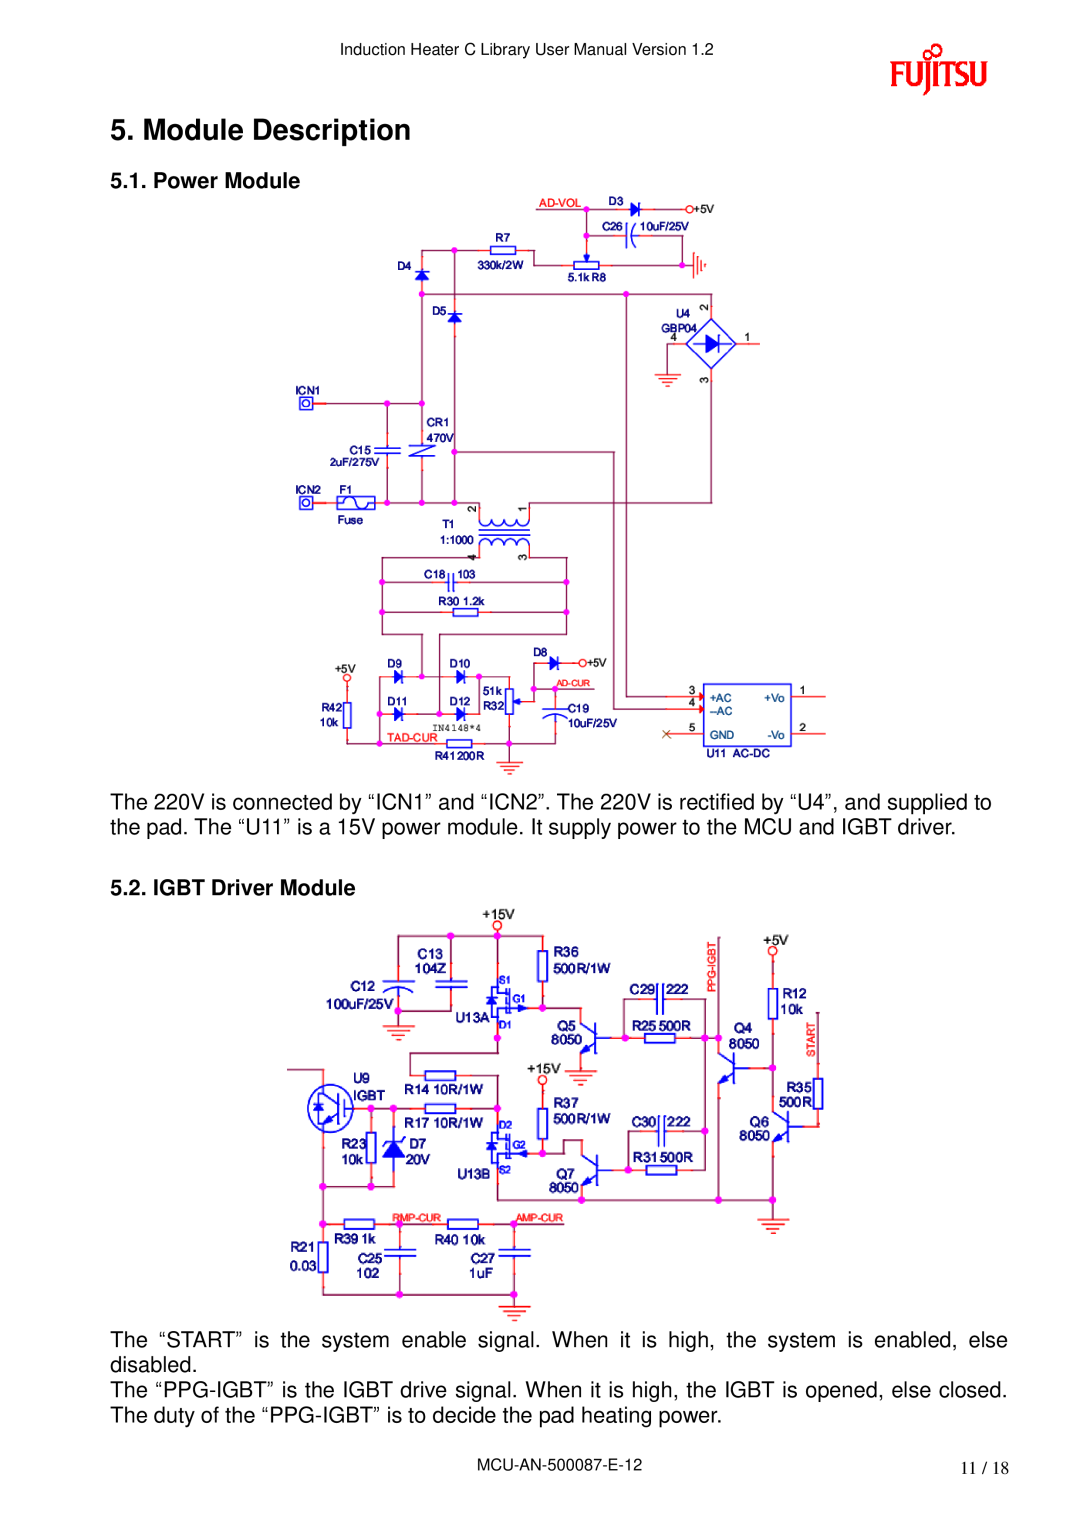 Fujitsu MB95F430 user manual Module Description, Power Module, IGBT Driver Module 